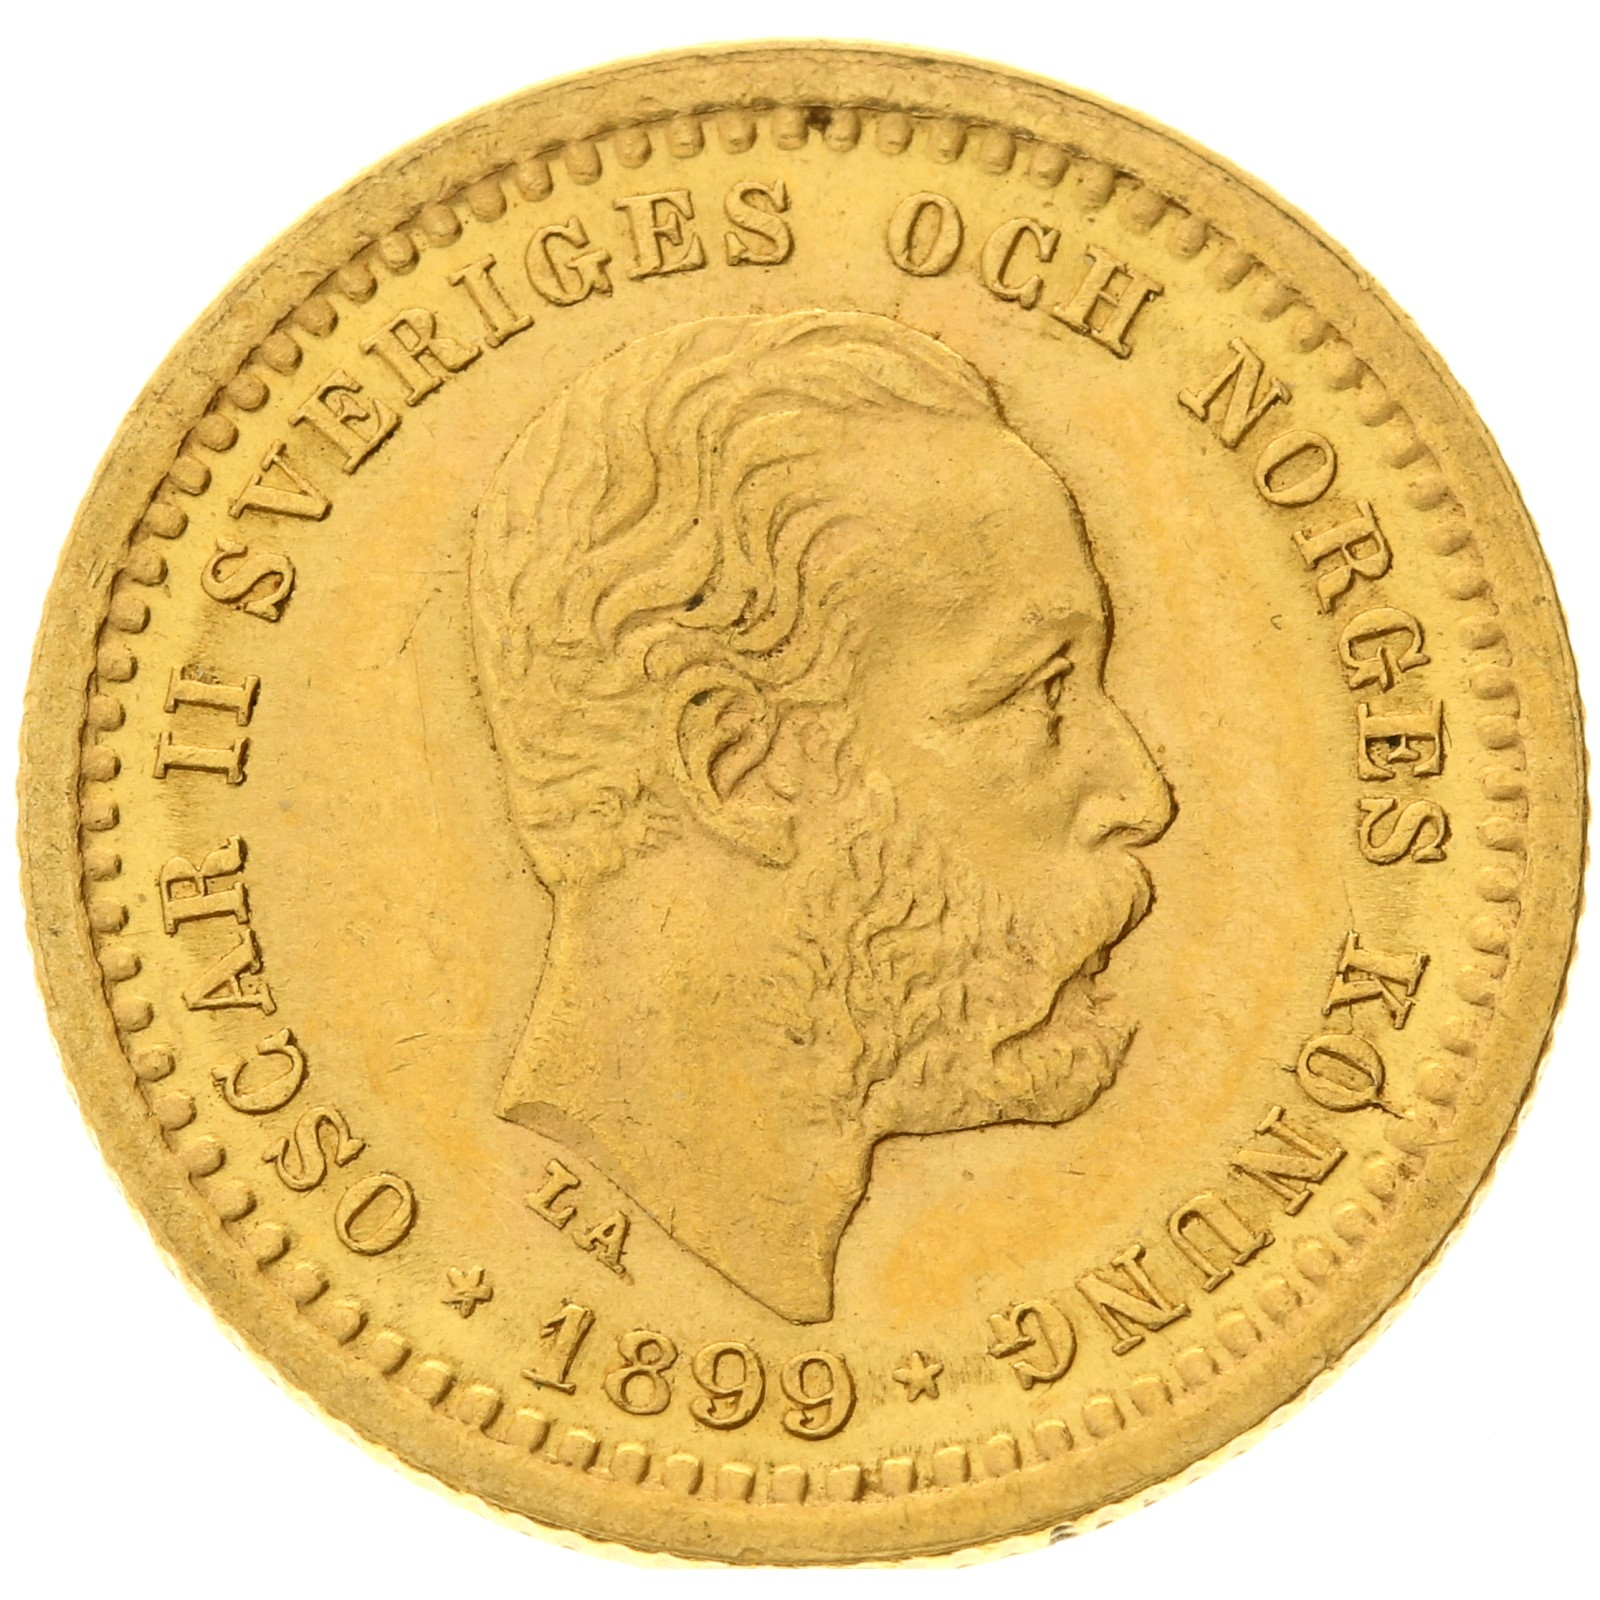 Sweden - 5 kronor - 1899 - Oscar II 